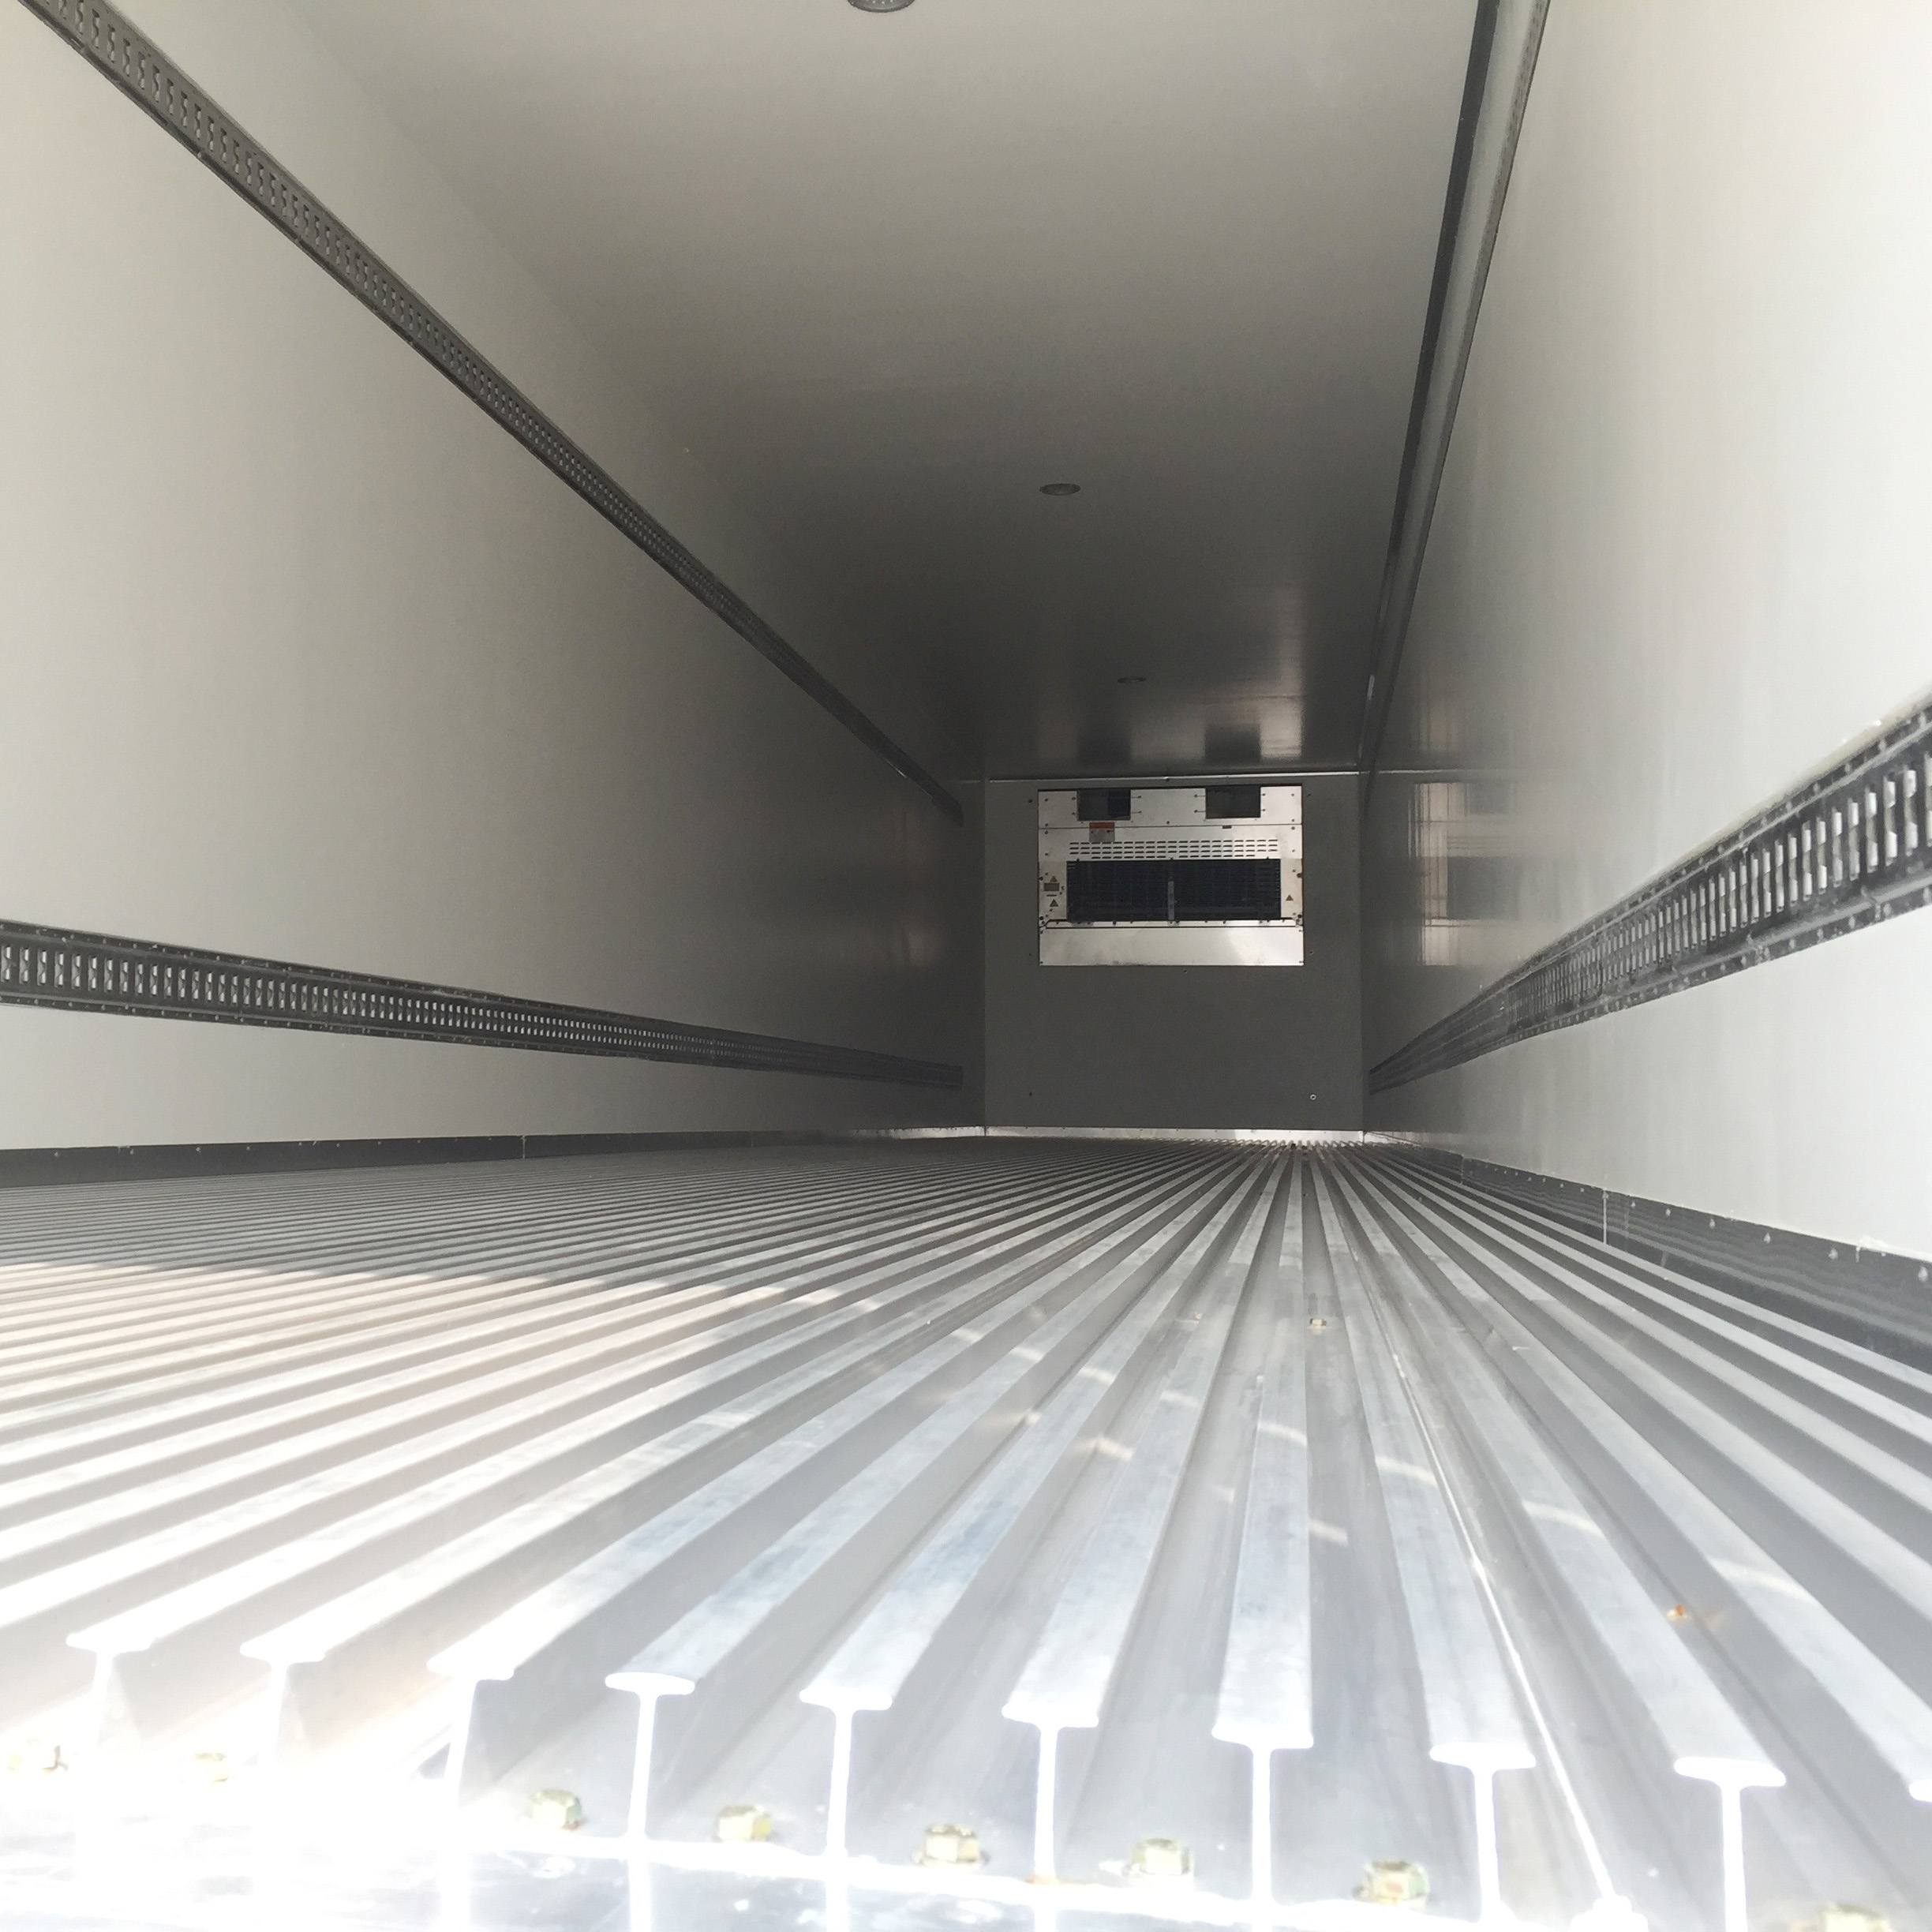 30ft Single Axles Refrigerated Semi Truck Trailer